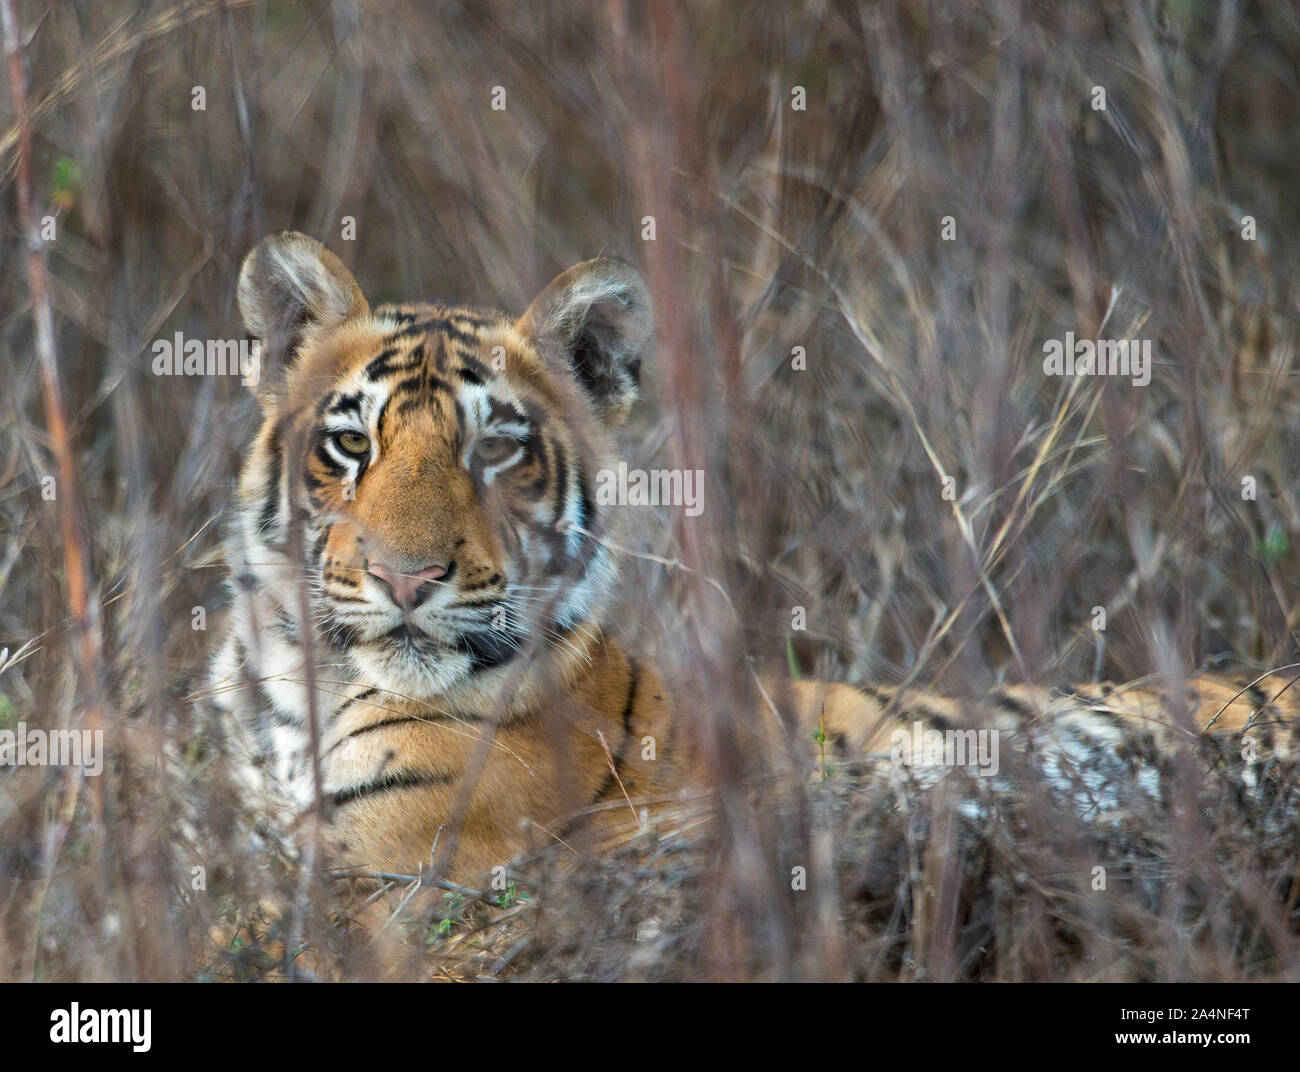 Tiger looking at camera Banque D'Images